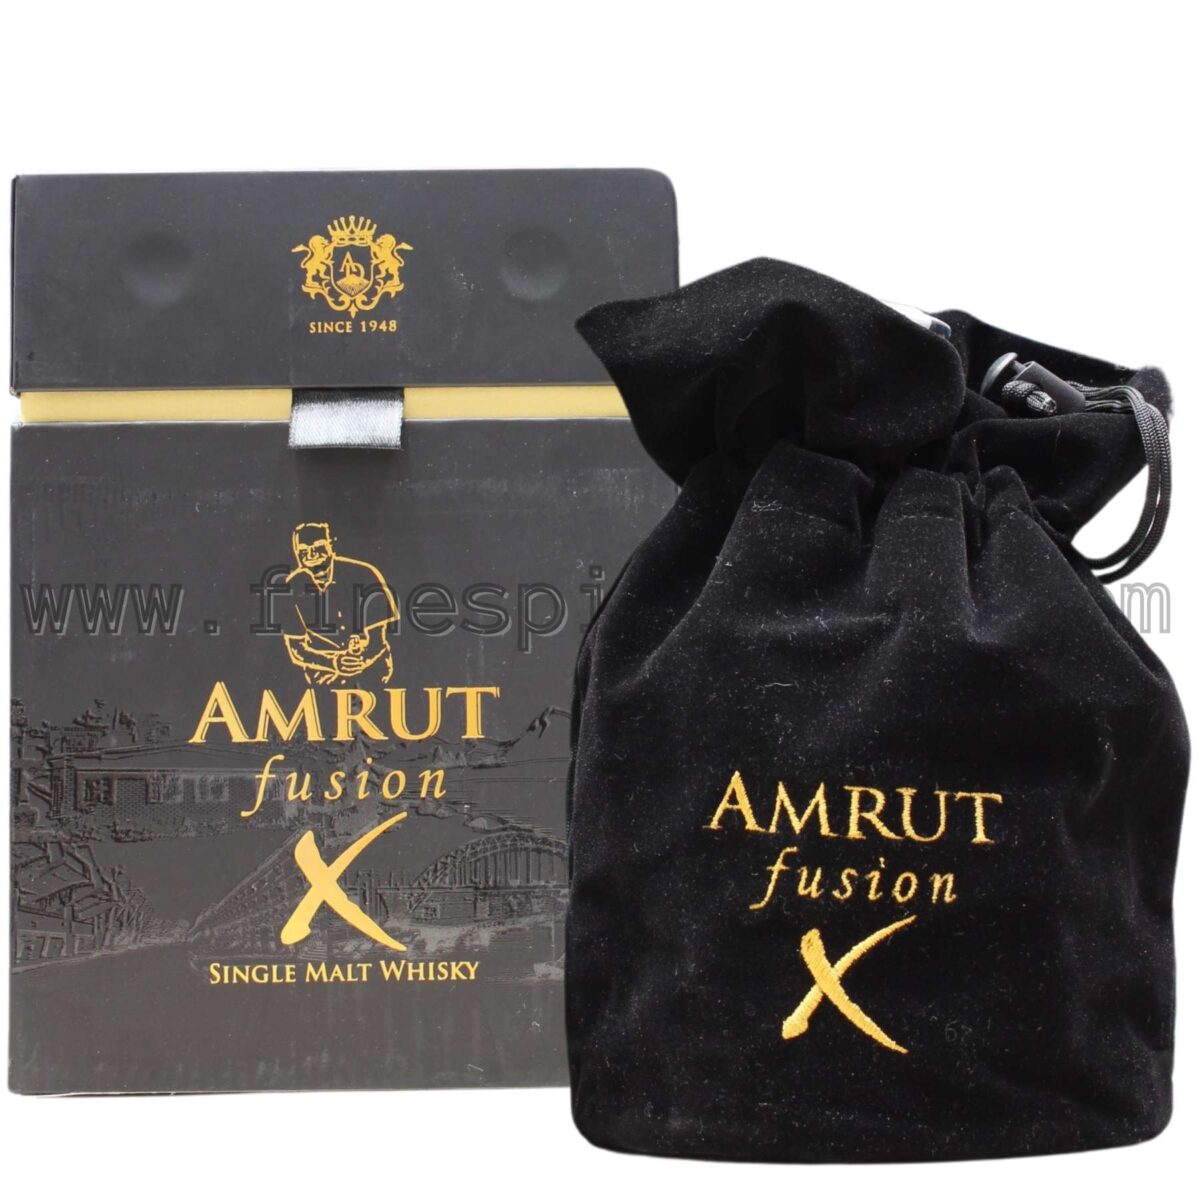 Amrut Fusion X Indian Whisky Bag Case Box Cyprus Fine Spirits CY Price